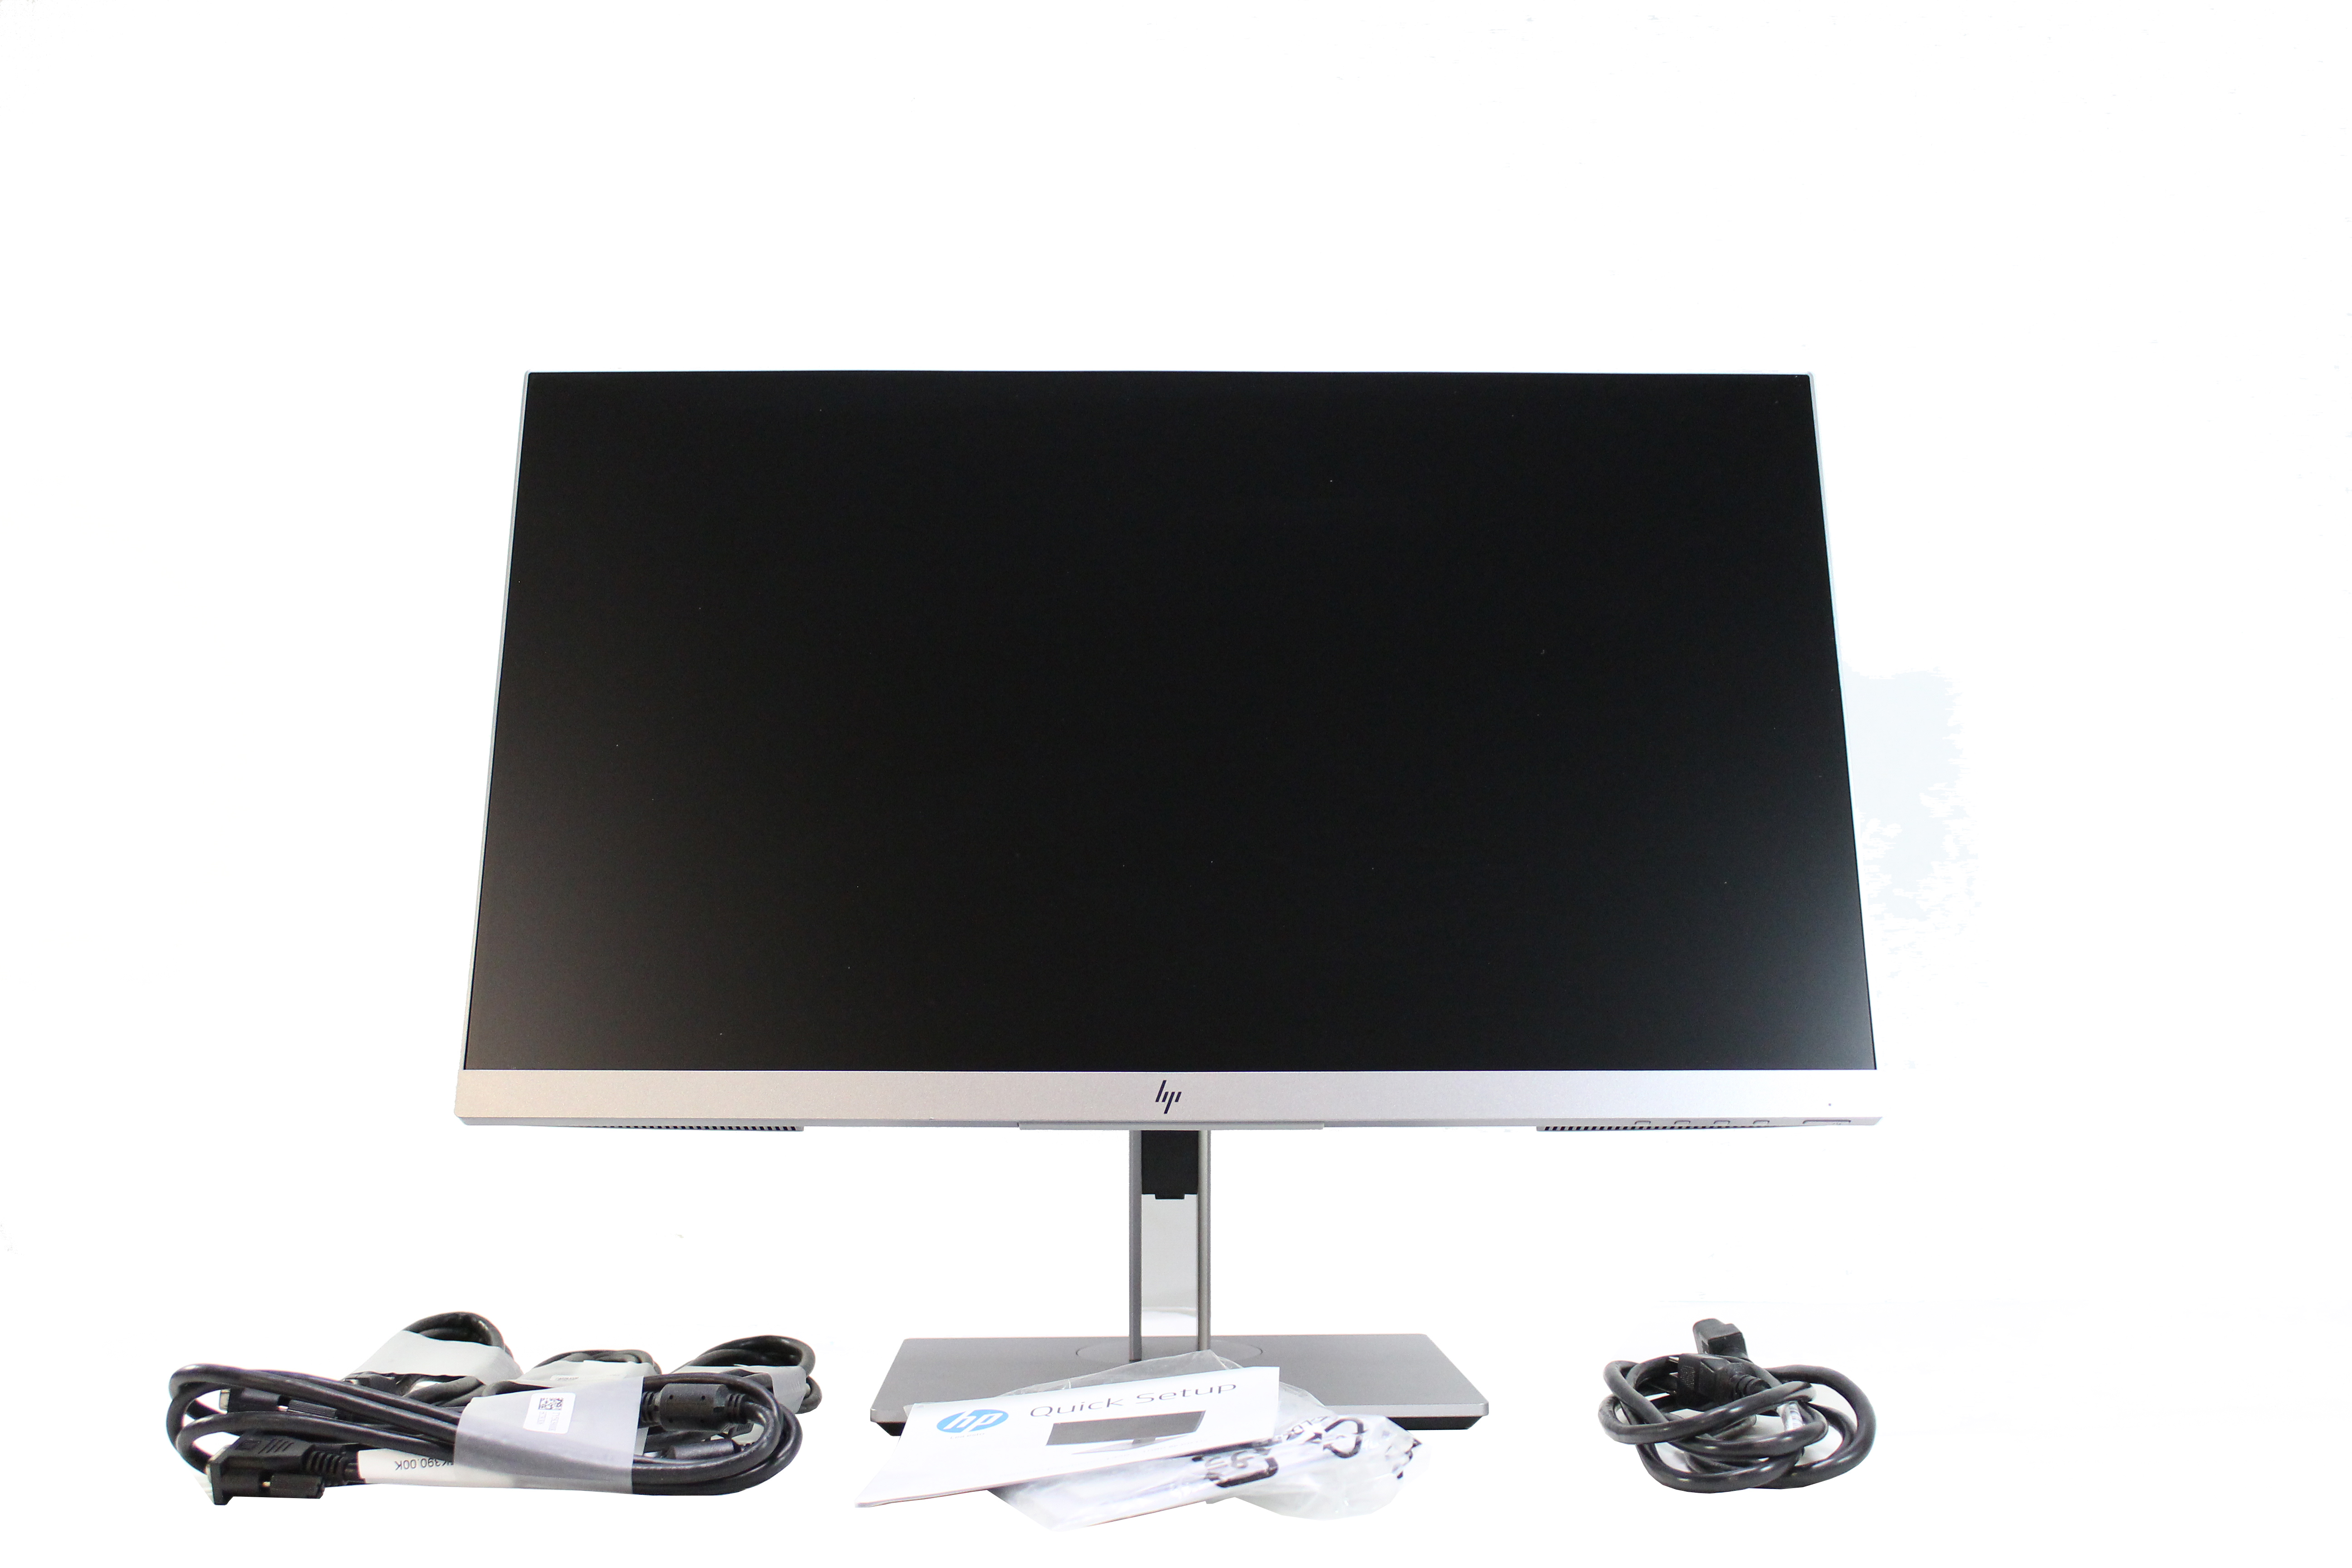 HP Elite display E243 LED Monitor Full HD (1080p) 23.8" Smart Buy 1FH47A8#ABA